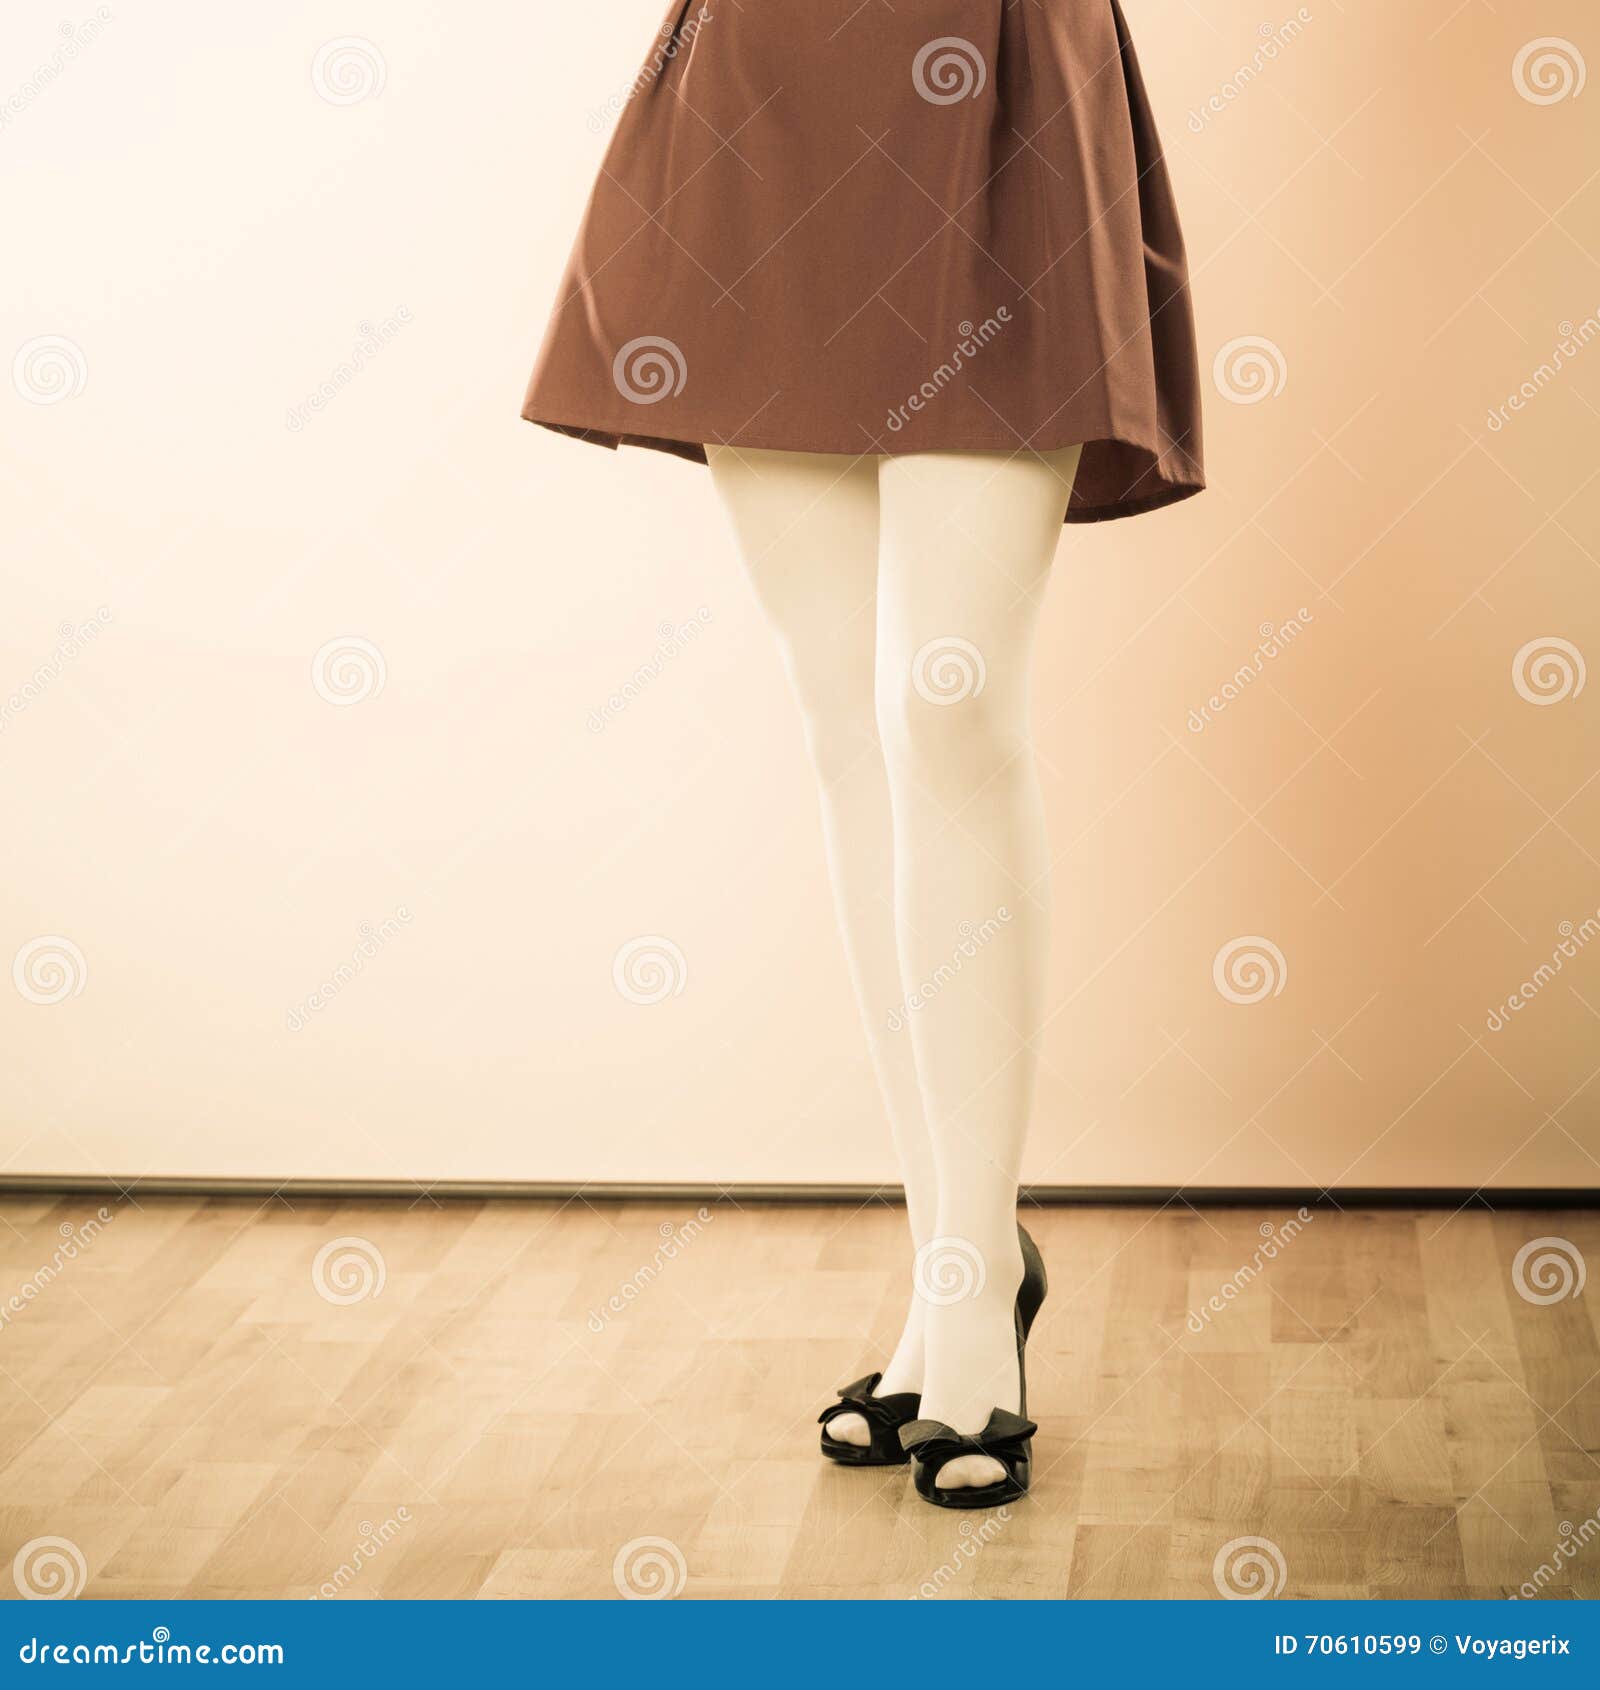 Fashion Woman Legs in White Pantyhose Stock Image - Image of legs ...